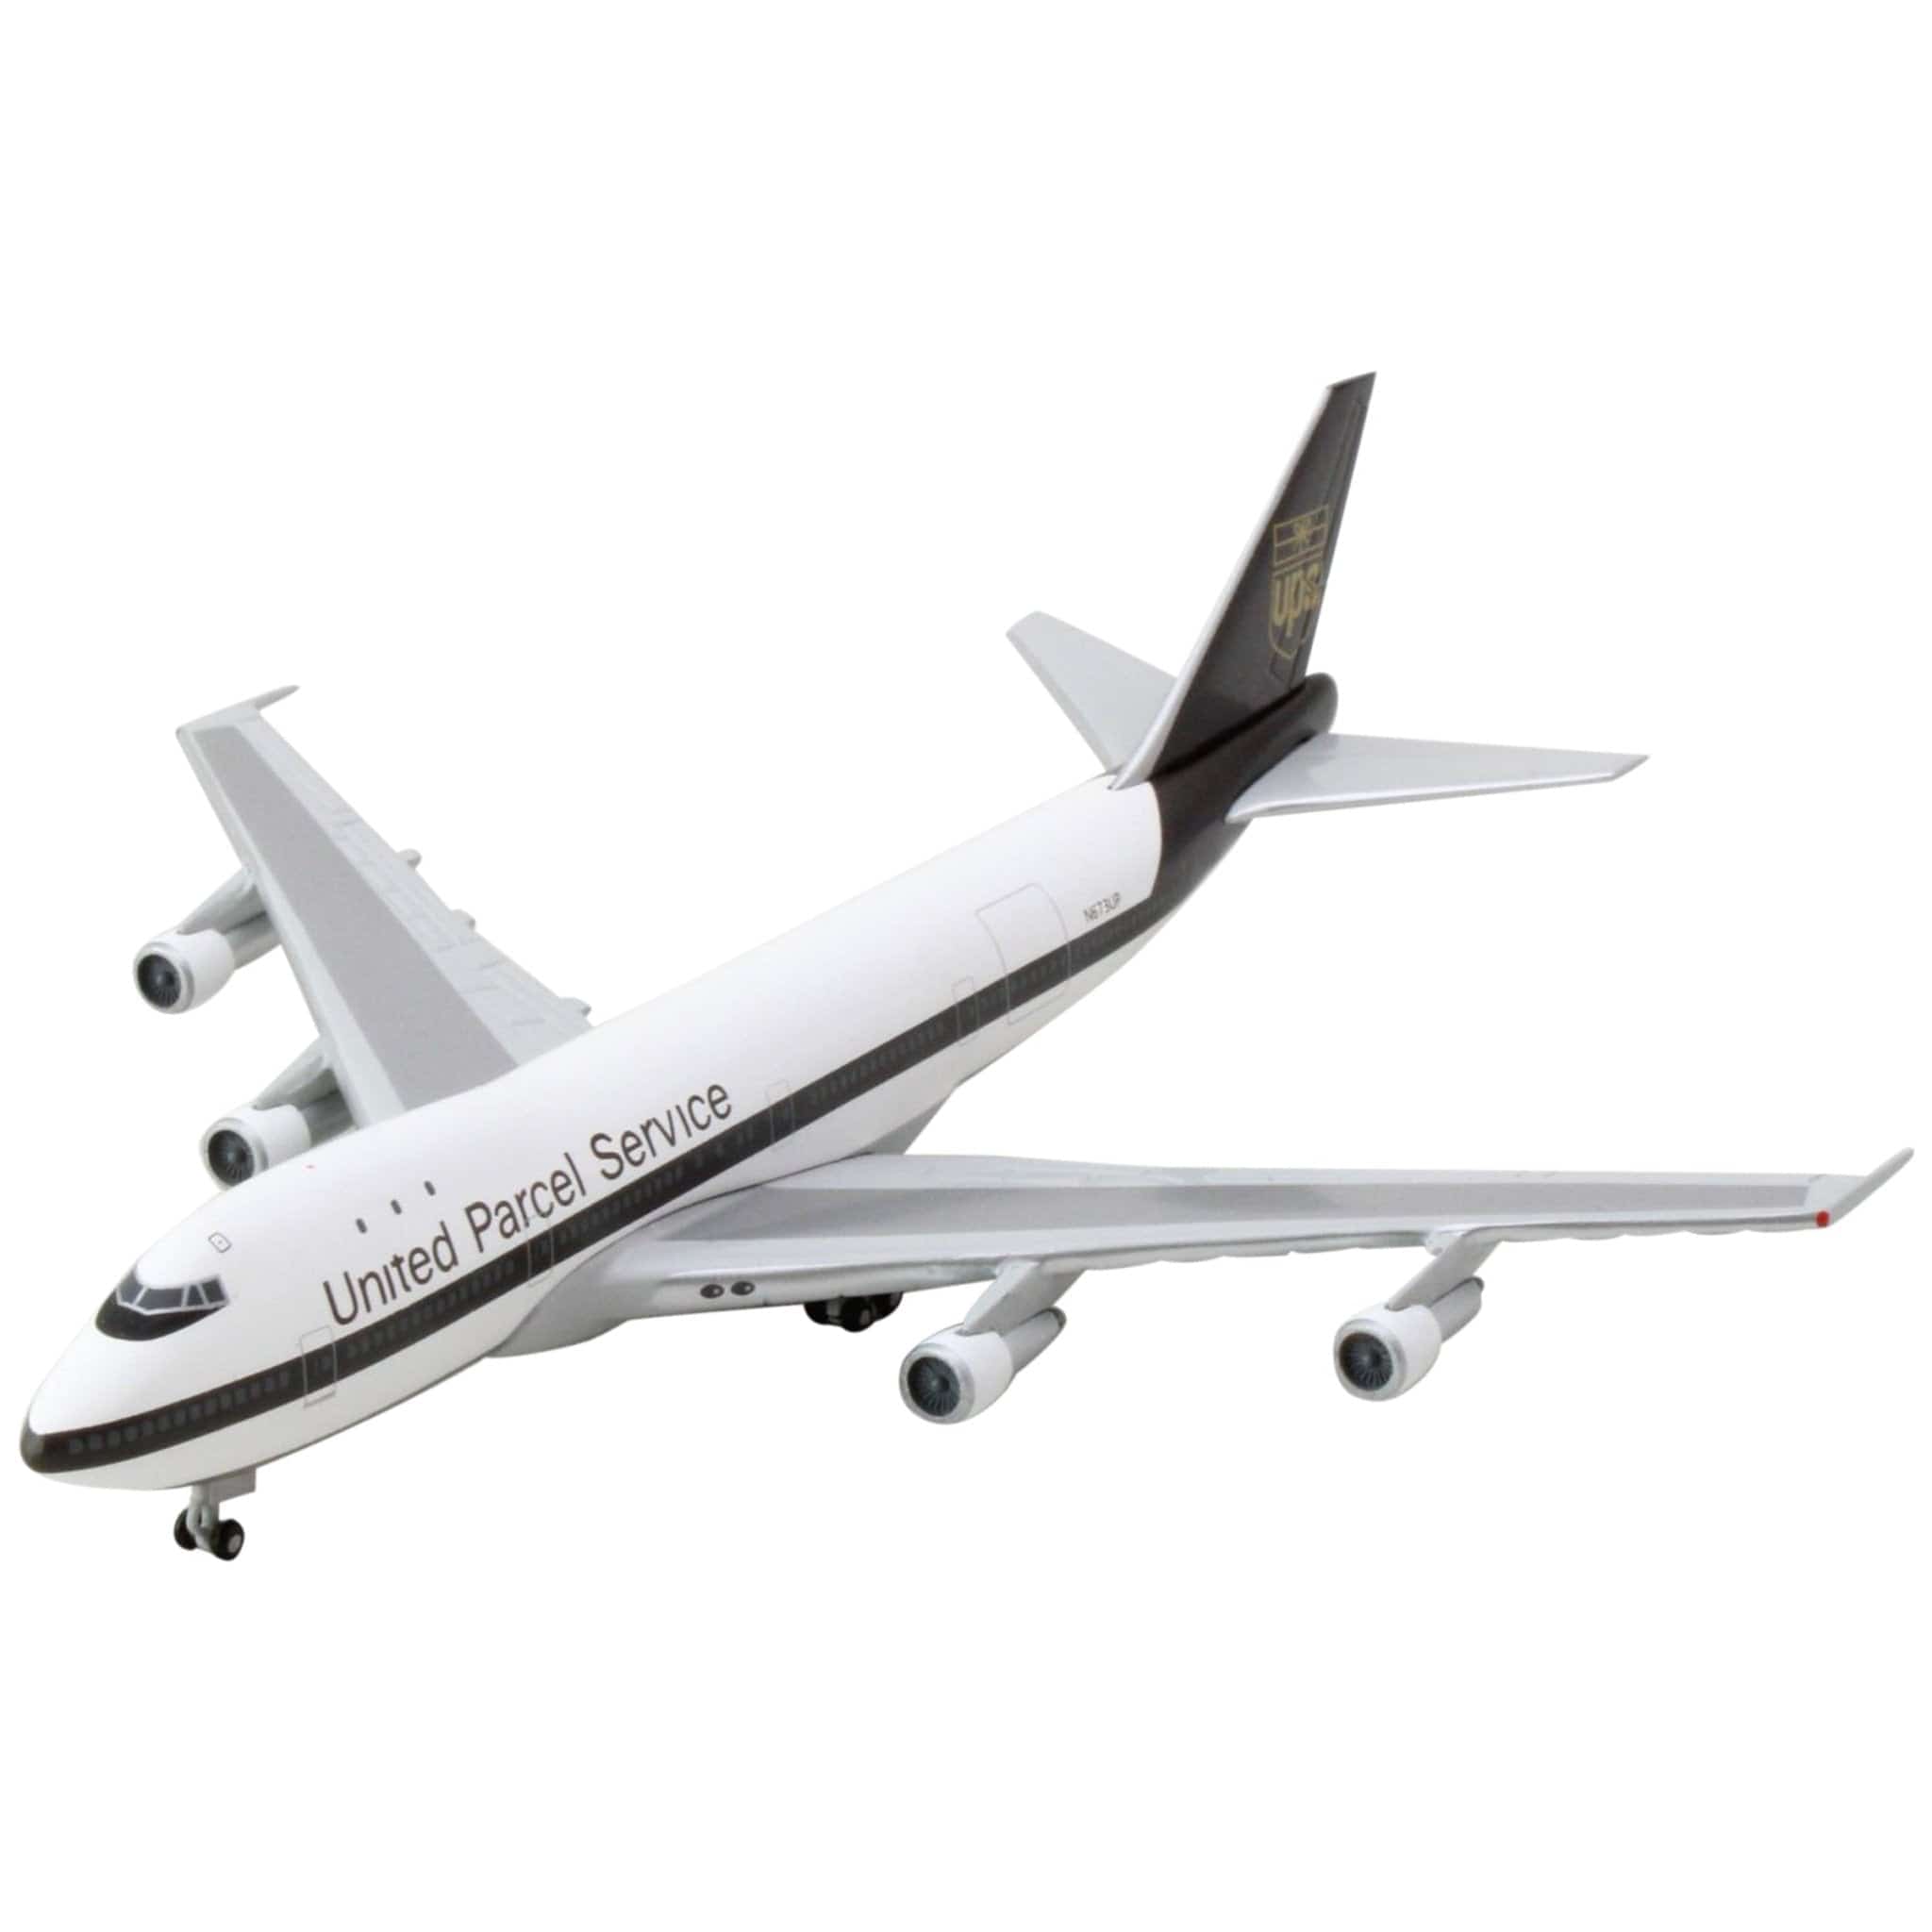 Herpa UPS 747-100F 1/500 Die-Cast Metal Model Aircraft - PilotMall.com